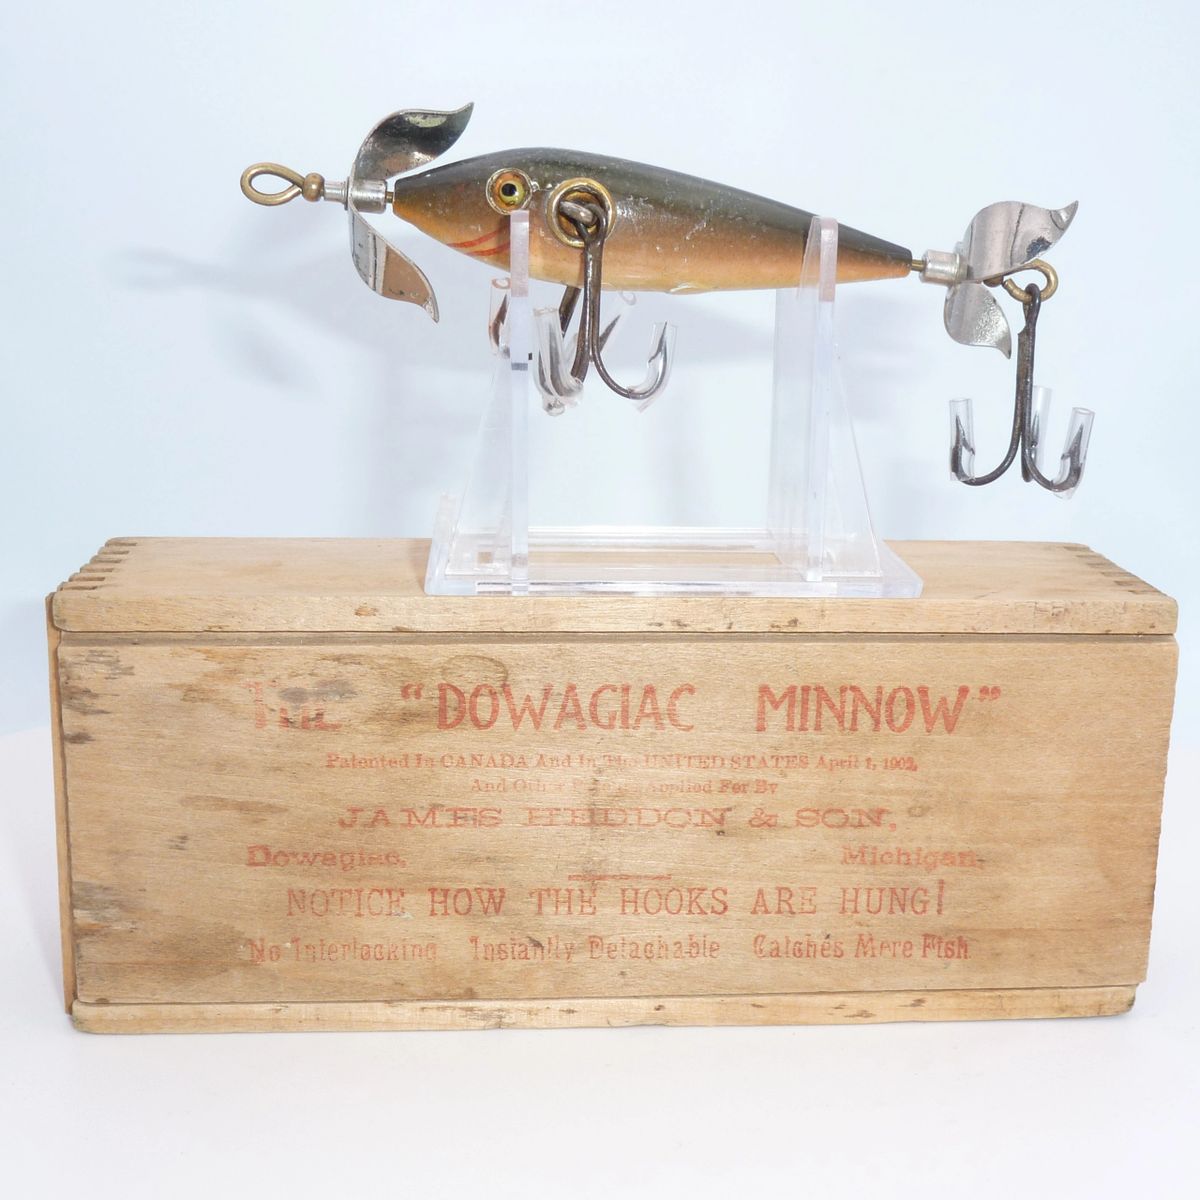 Biddergy - Worldwide Online Auction and Liquidation Services - J-11 Vintage Fishing  Lure + Heddon Cobra Lure